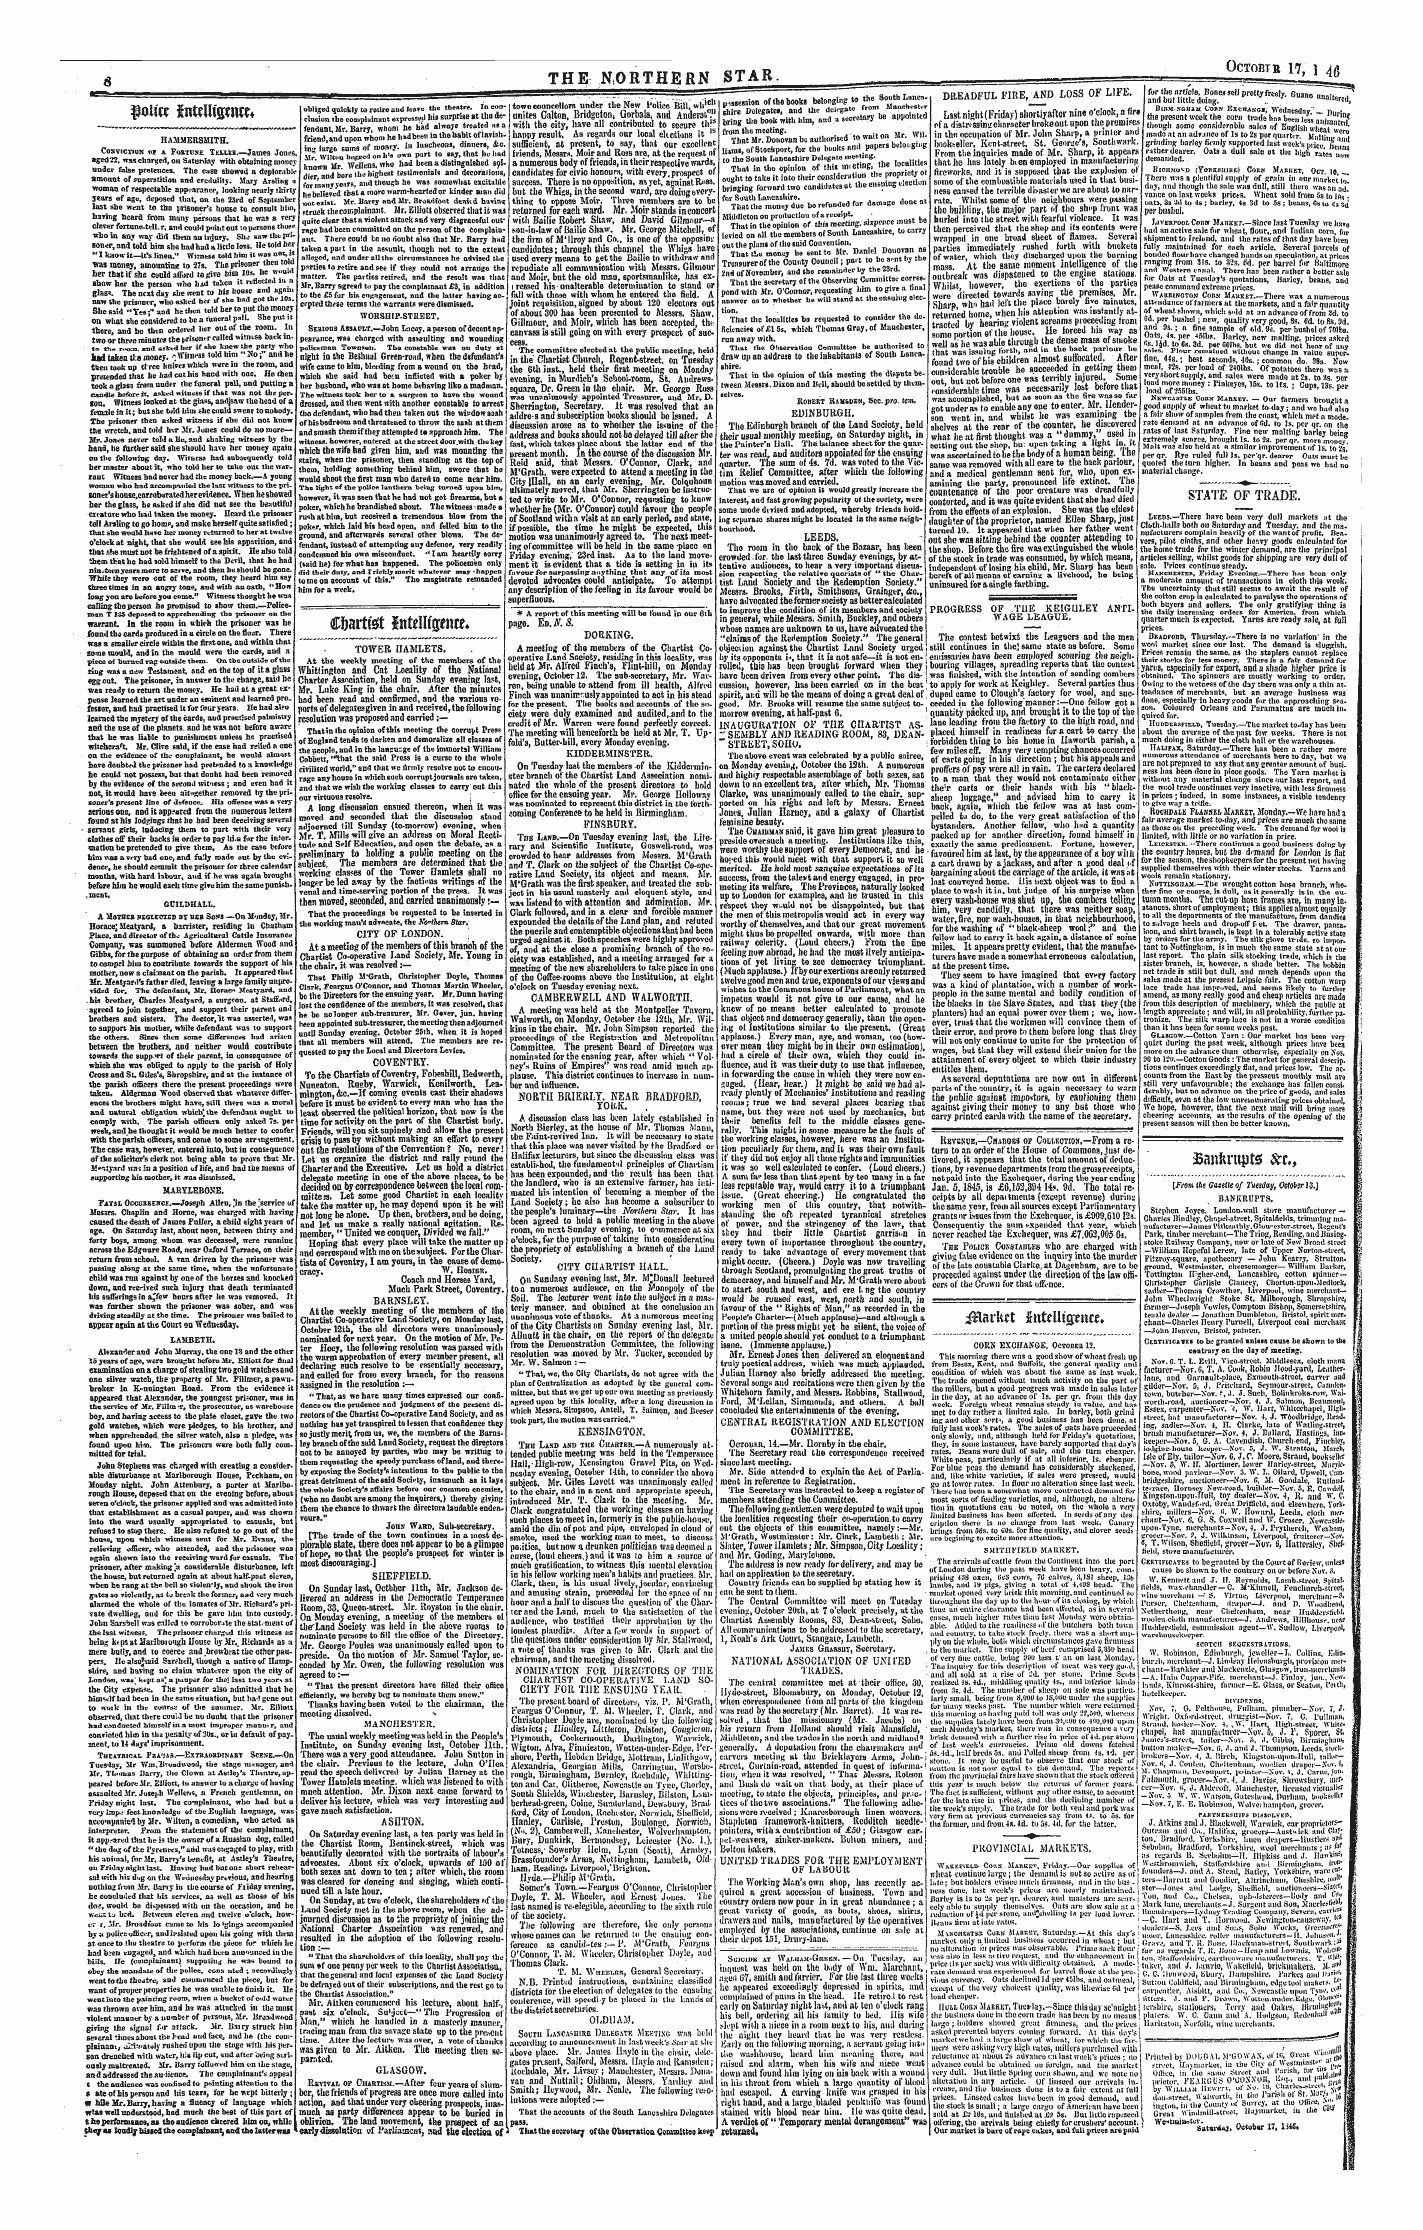 Northern Star (1837-1852): jS F Y, 1st edition - Market Jrnttiltgentt*